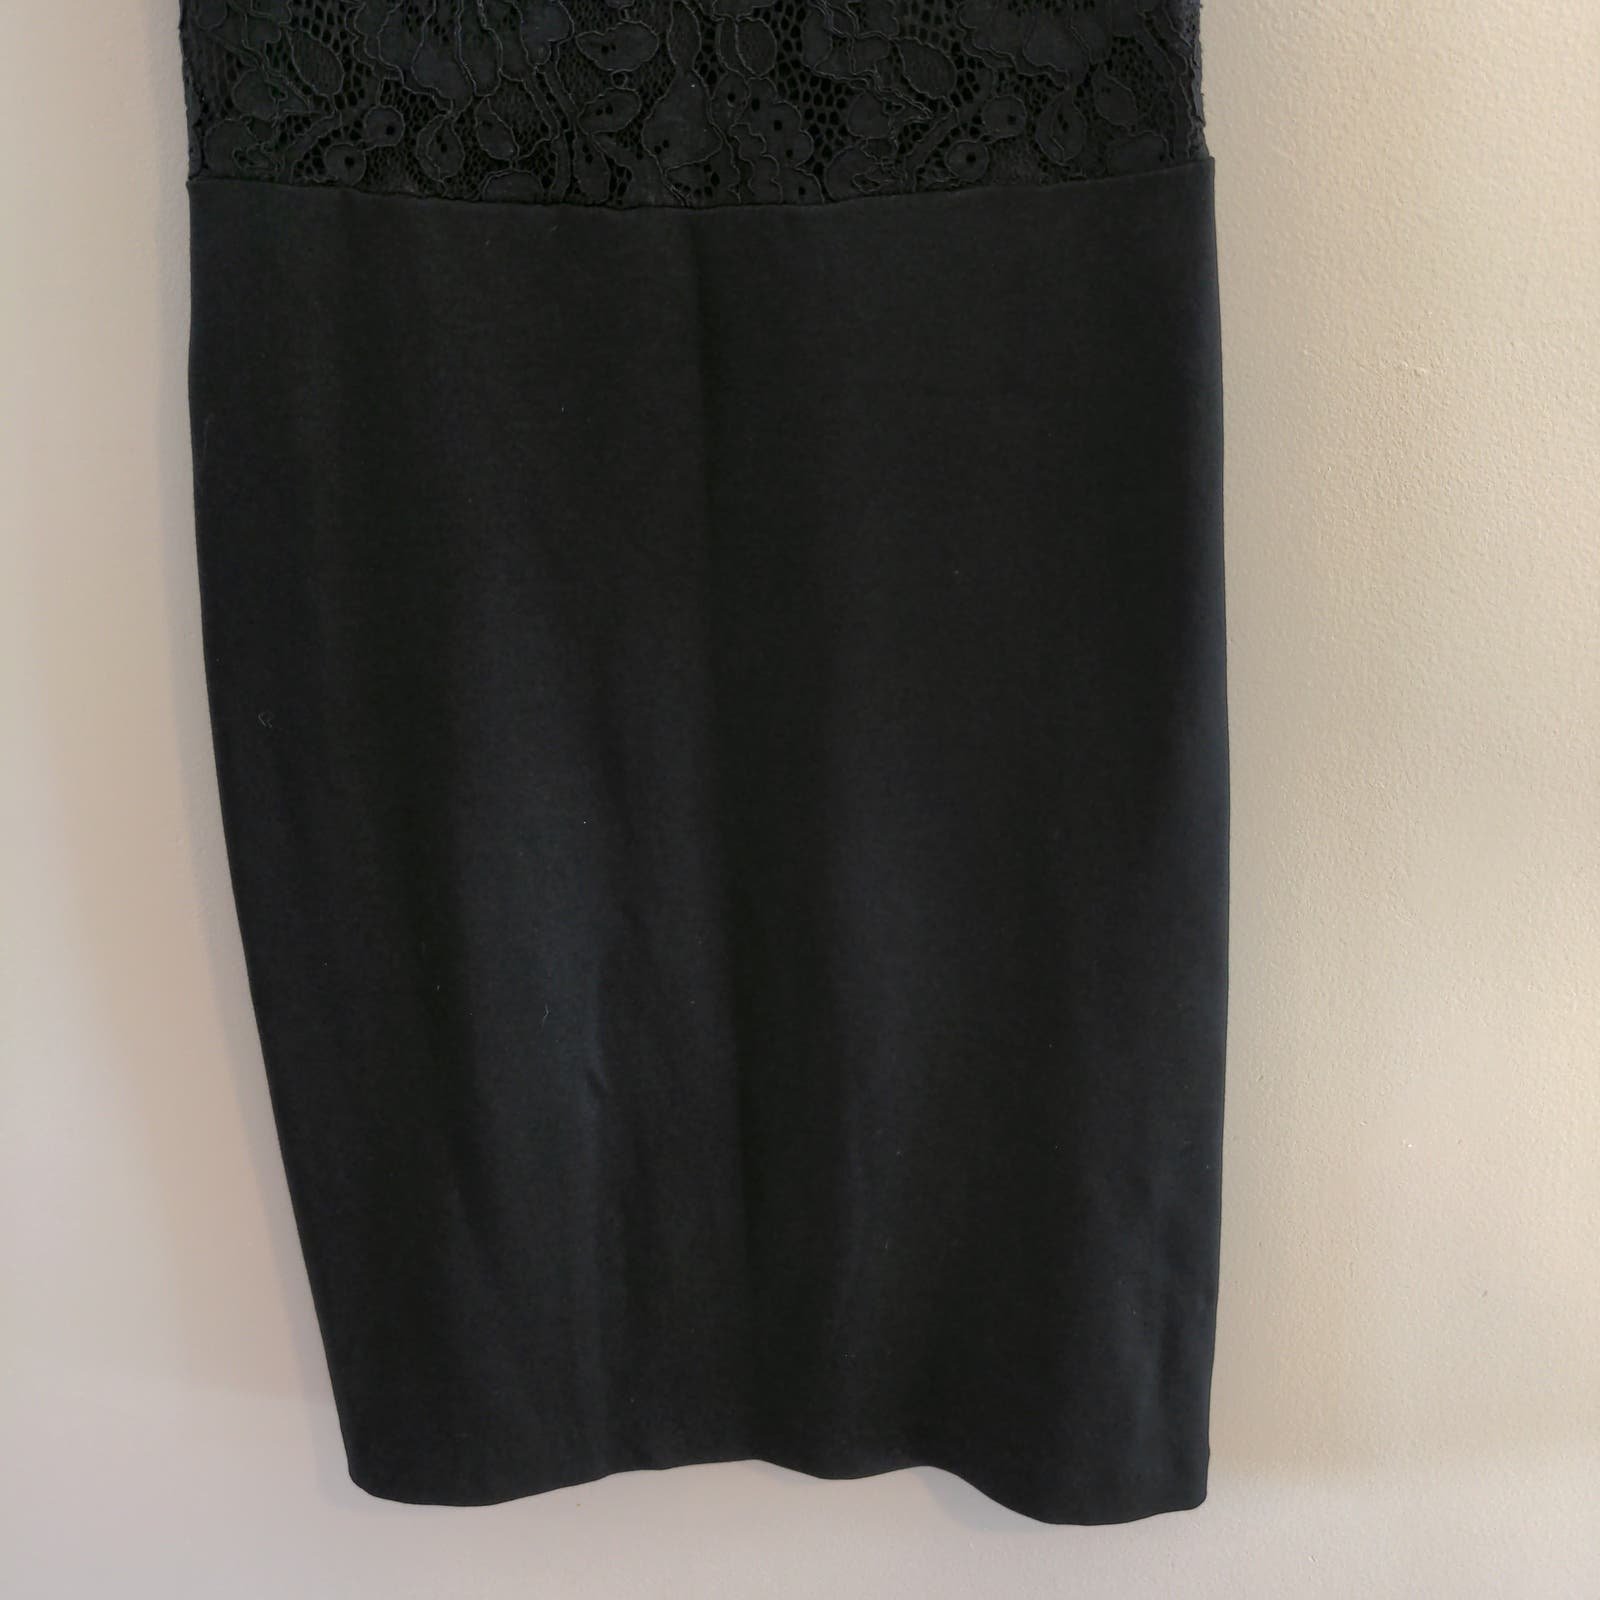 Promotions  Nicole Miller women´s black lace cocktail dress size 4 lnzY89OJL Discount